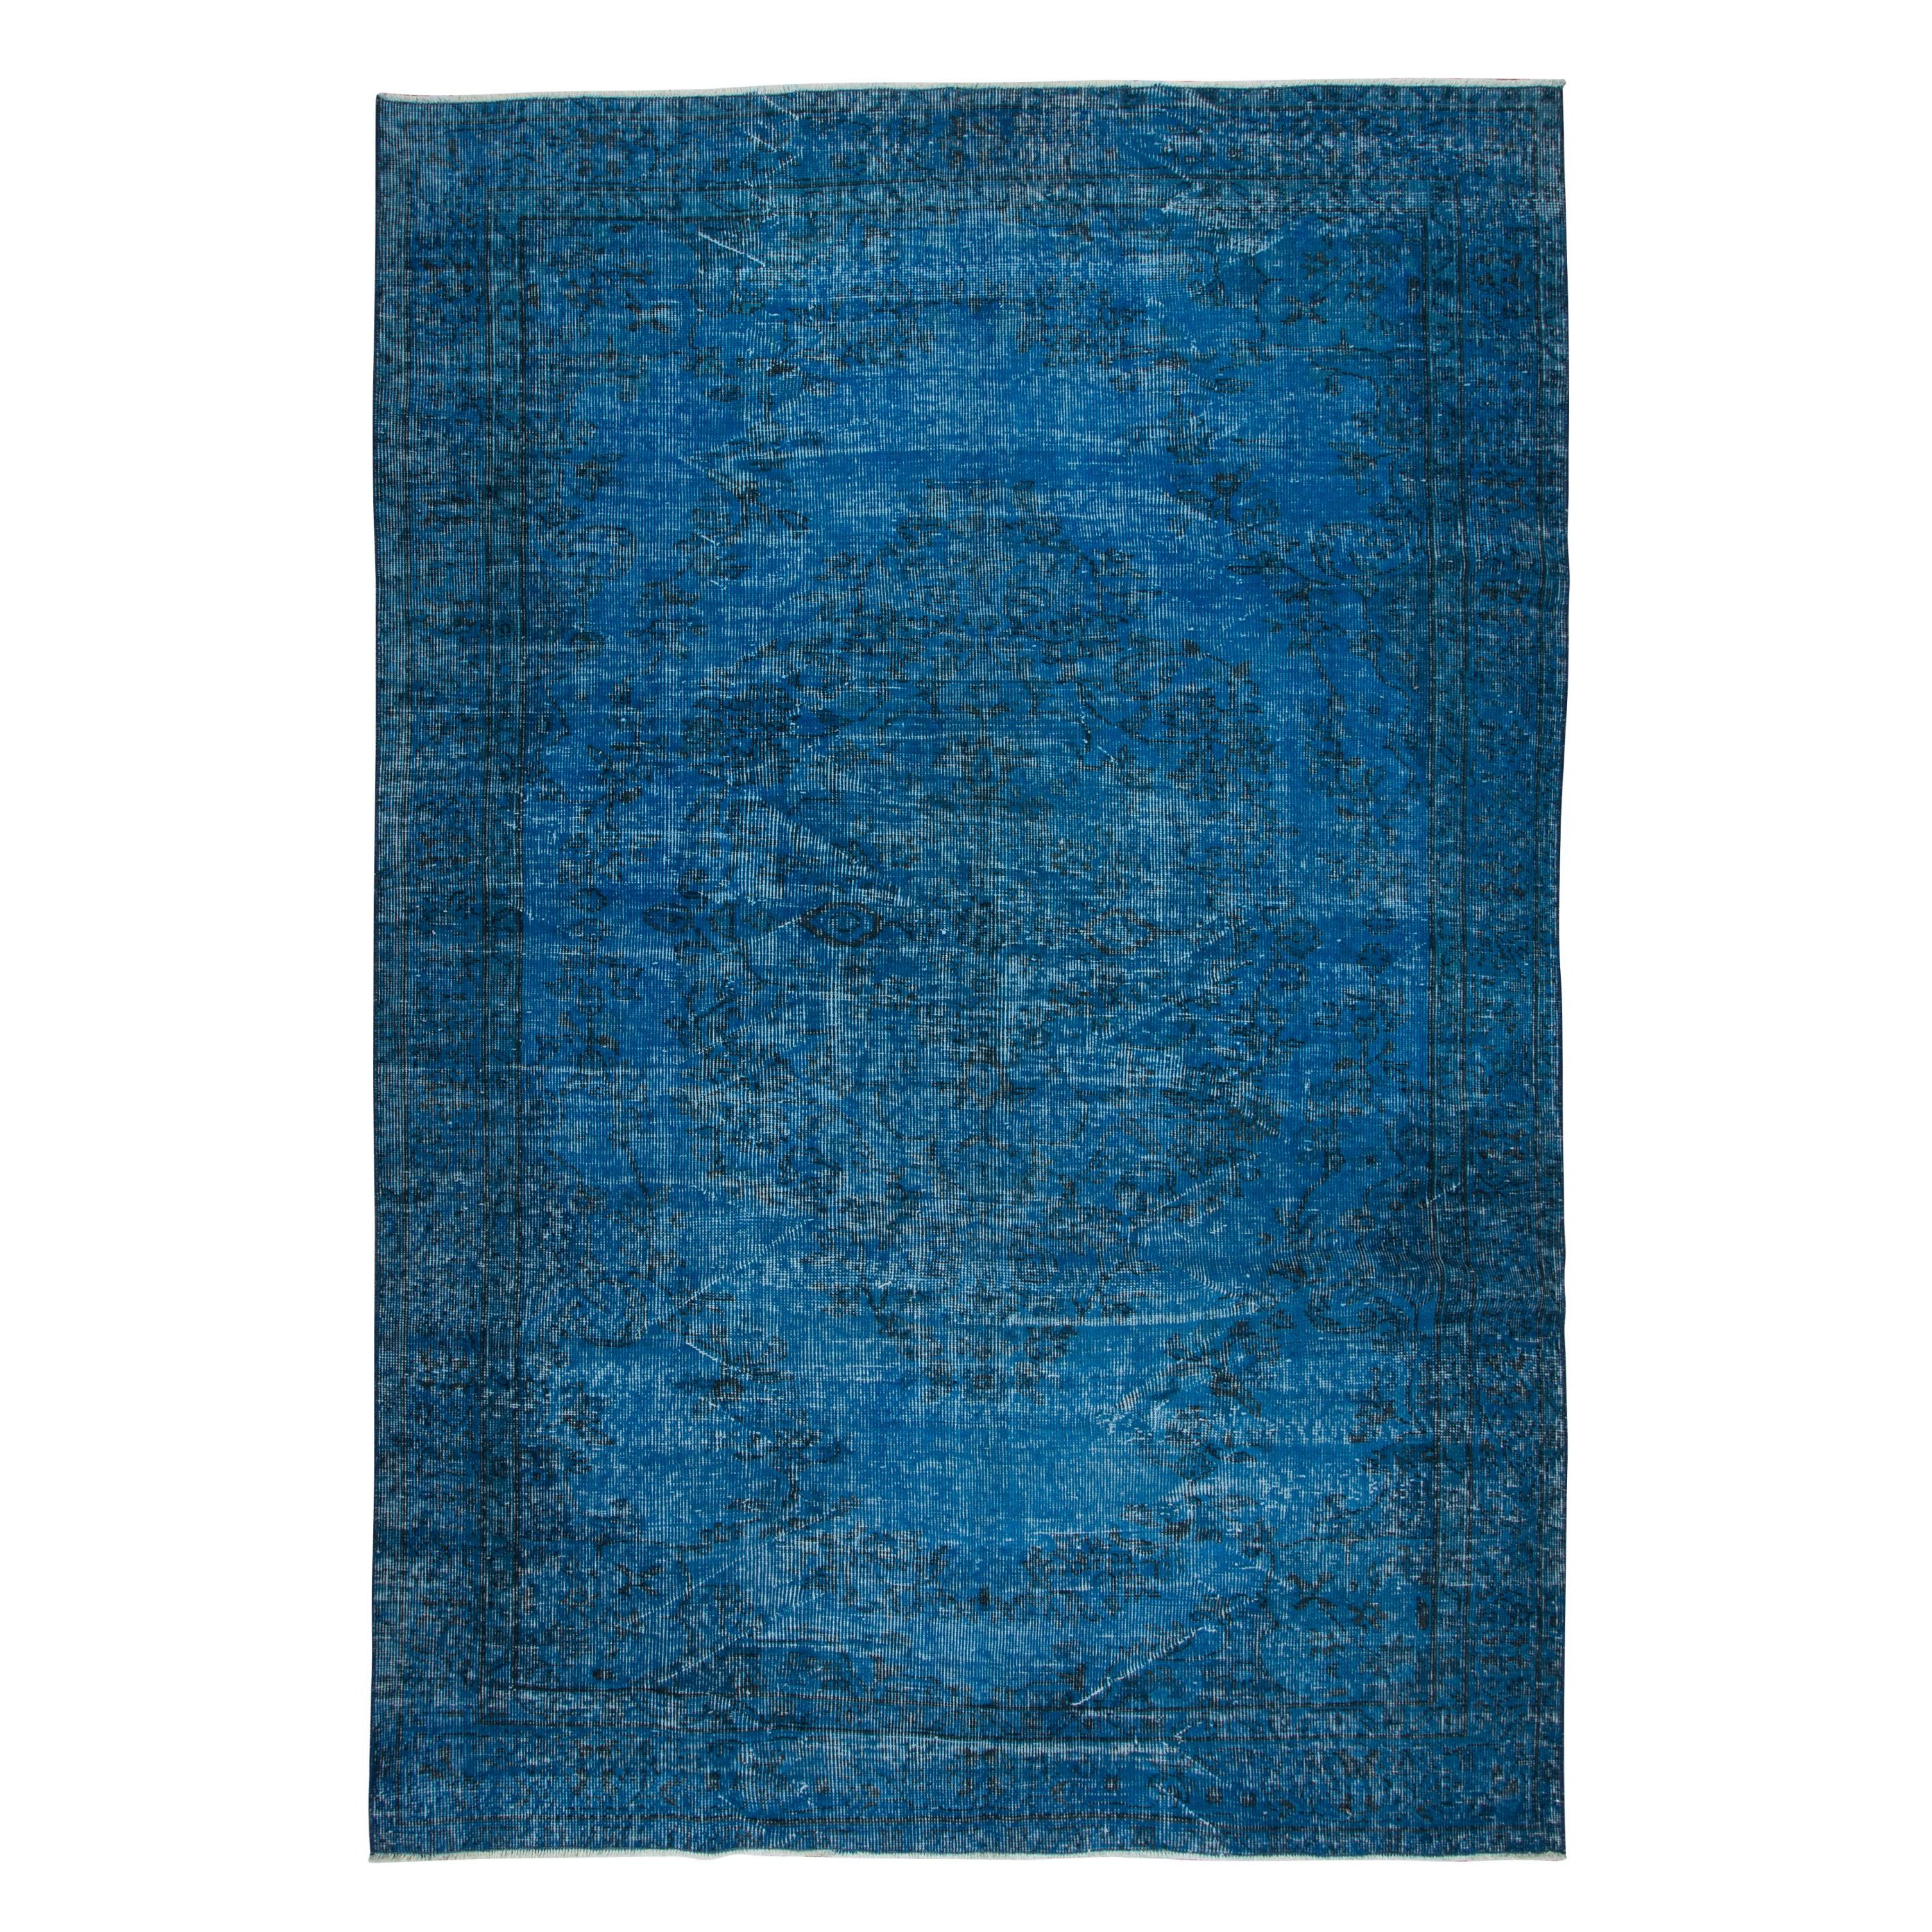 5.6x8.2 Ft Handmade Blue Area Rug from Turkey, Modern Anatolian Wool Carpet